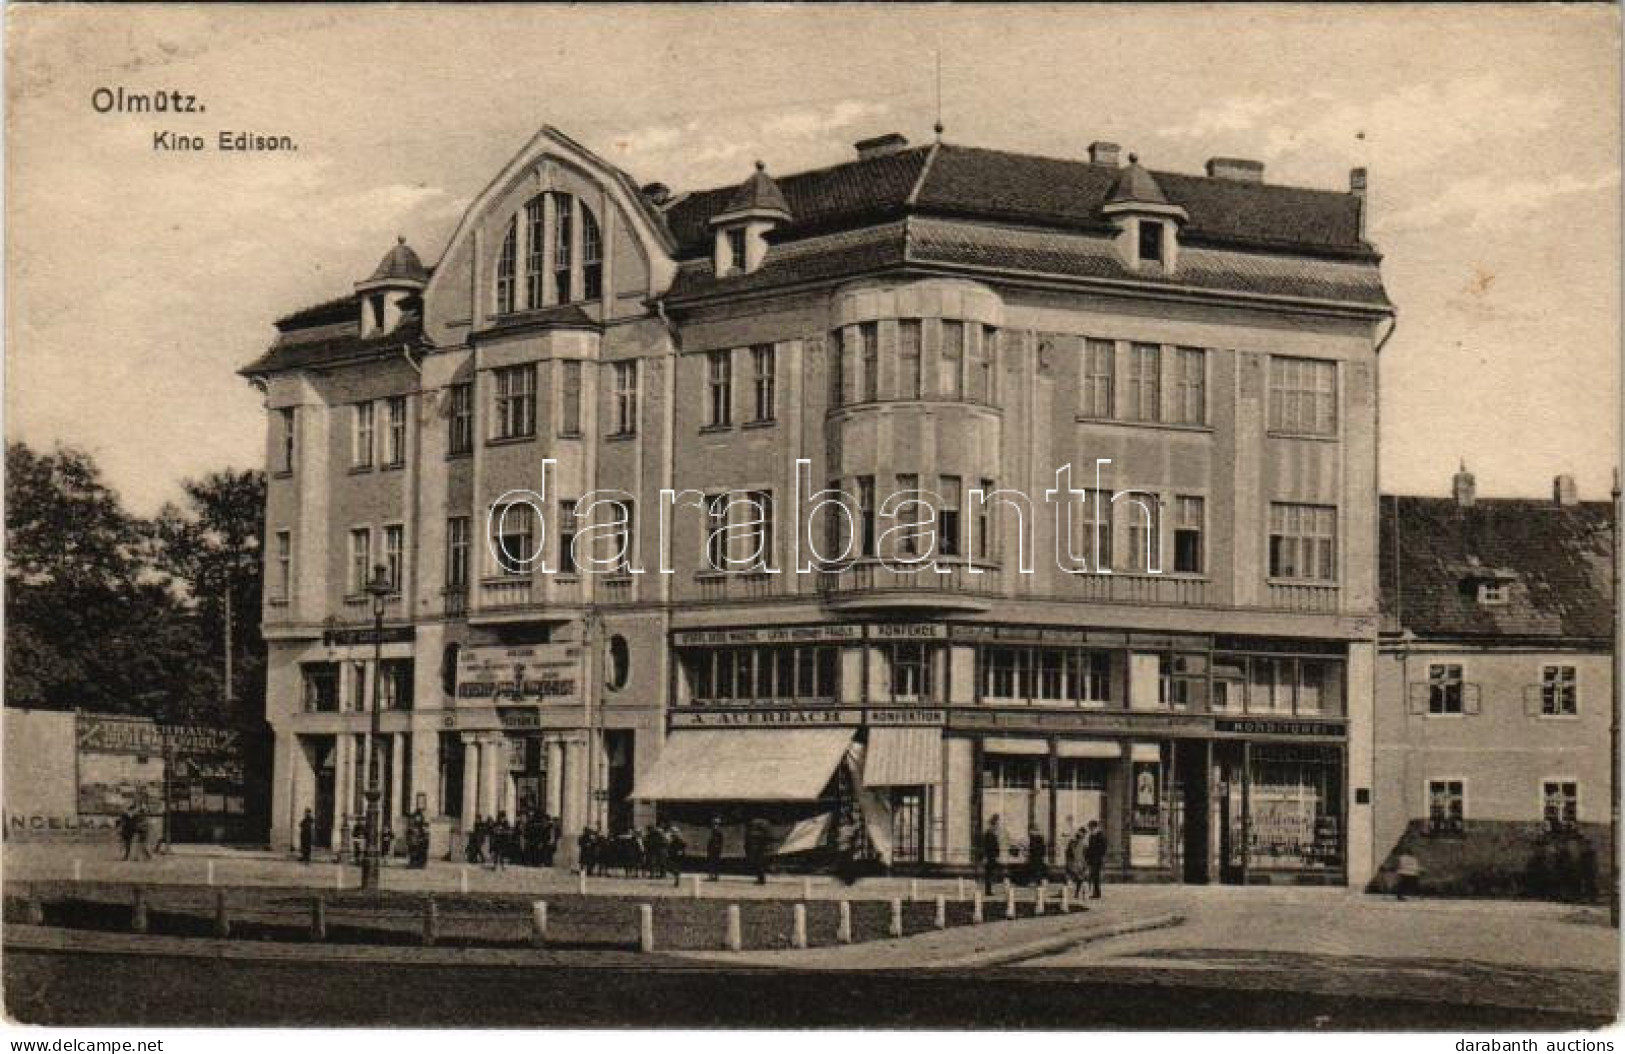 T2/T3 1915 Olomouc, Olmütz; Kino Edison, A. Auerbach Konfektion, Willy Weise Konditorei / Cinema, Shops, Confectionery ( - Non Classés